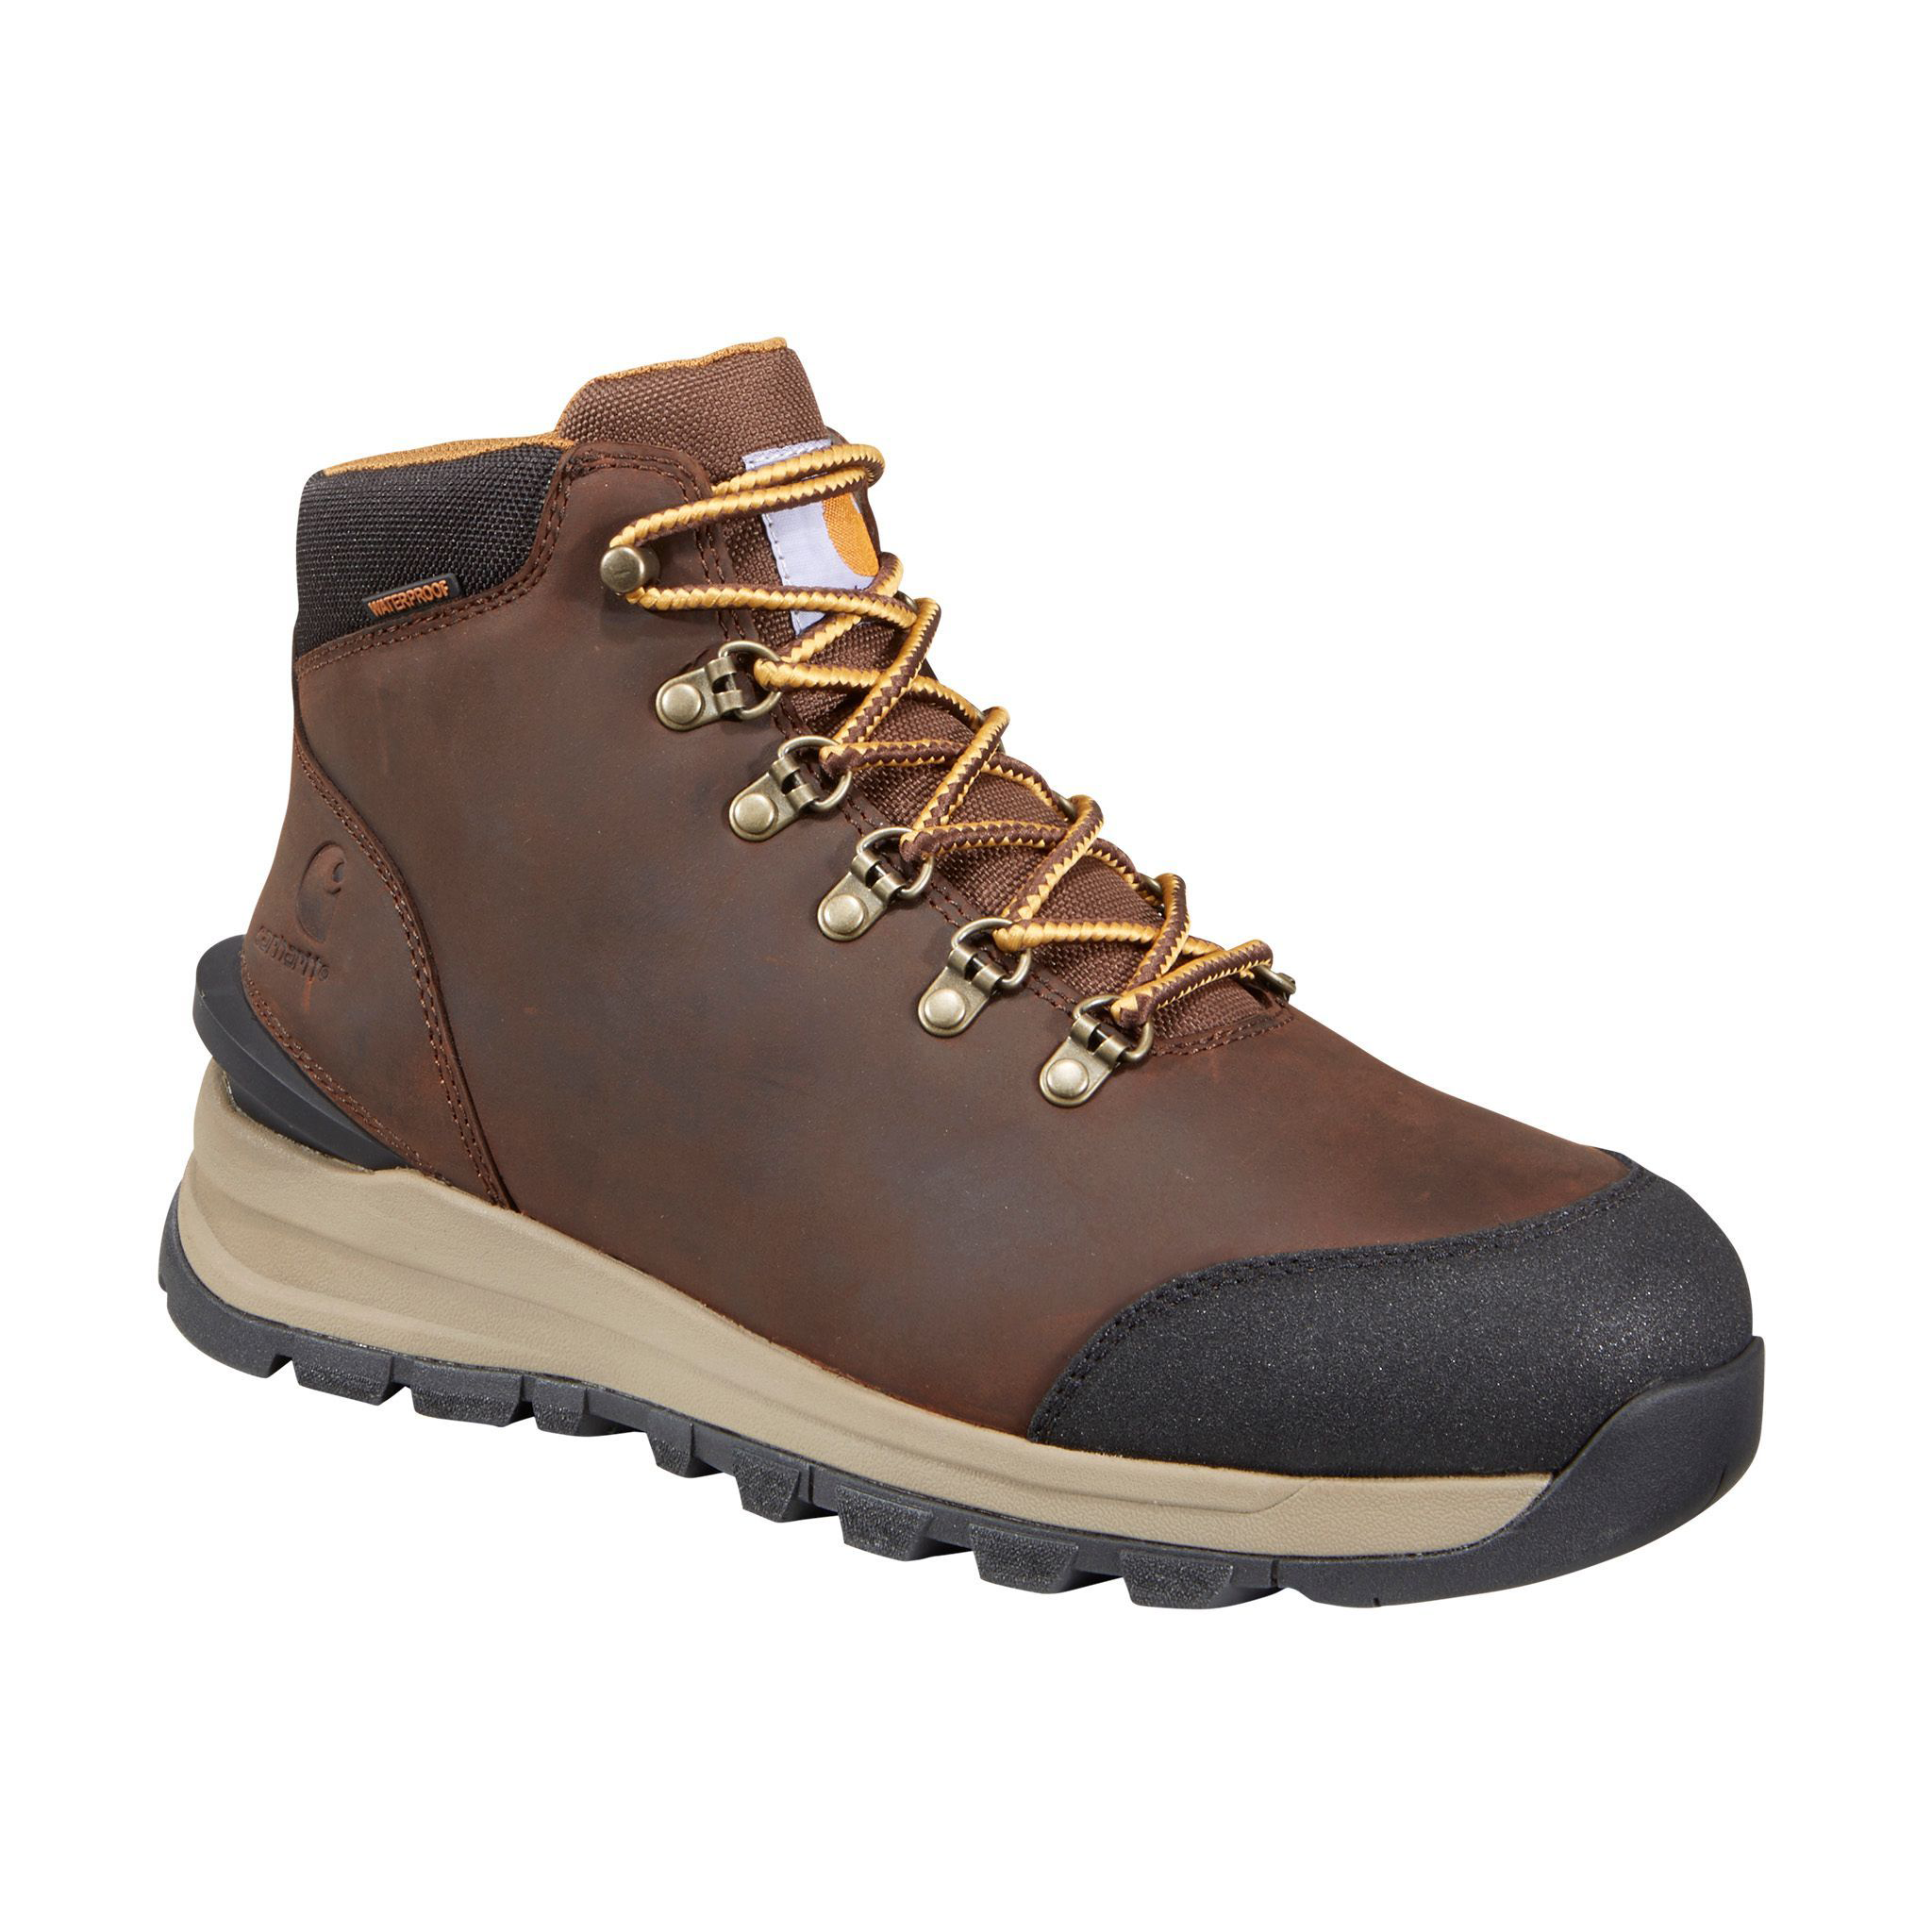 Carhartt Gilmore Waterproof Hiking Boots for Men - Dark Brown Oil Tanned - 11.5W